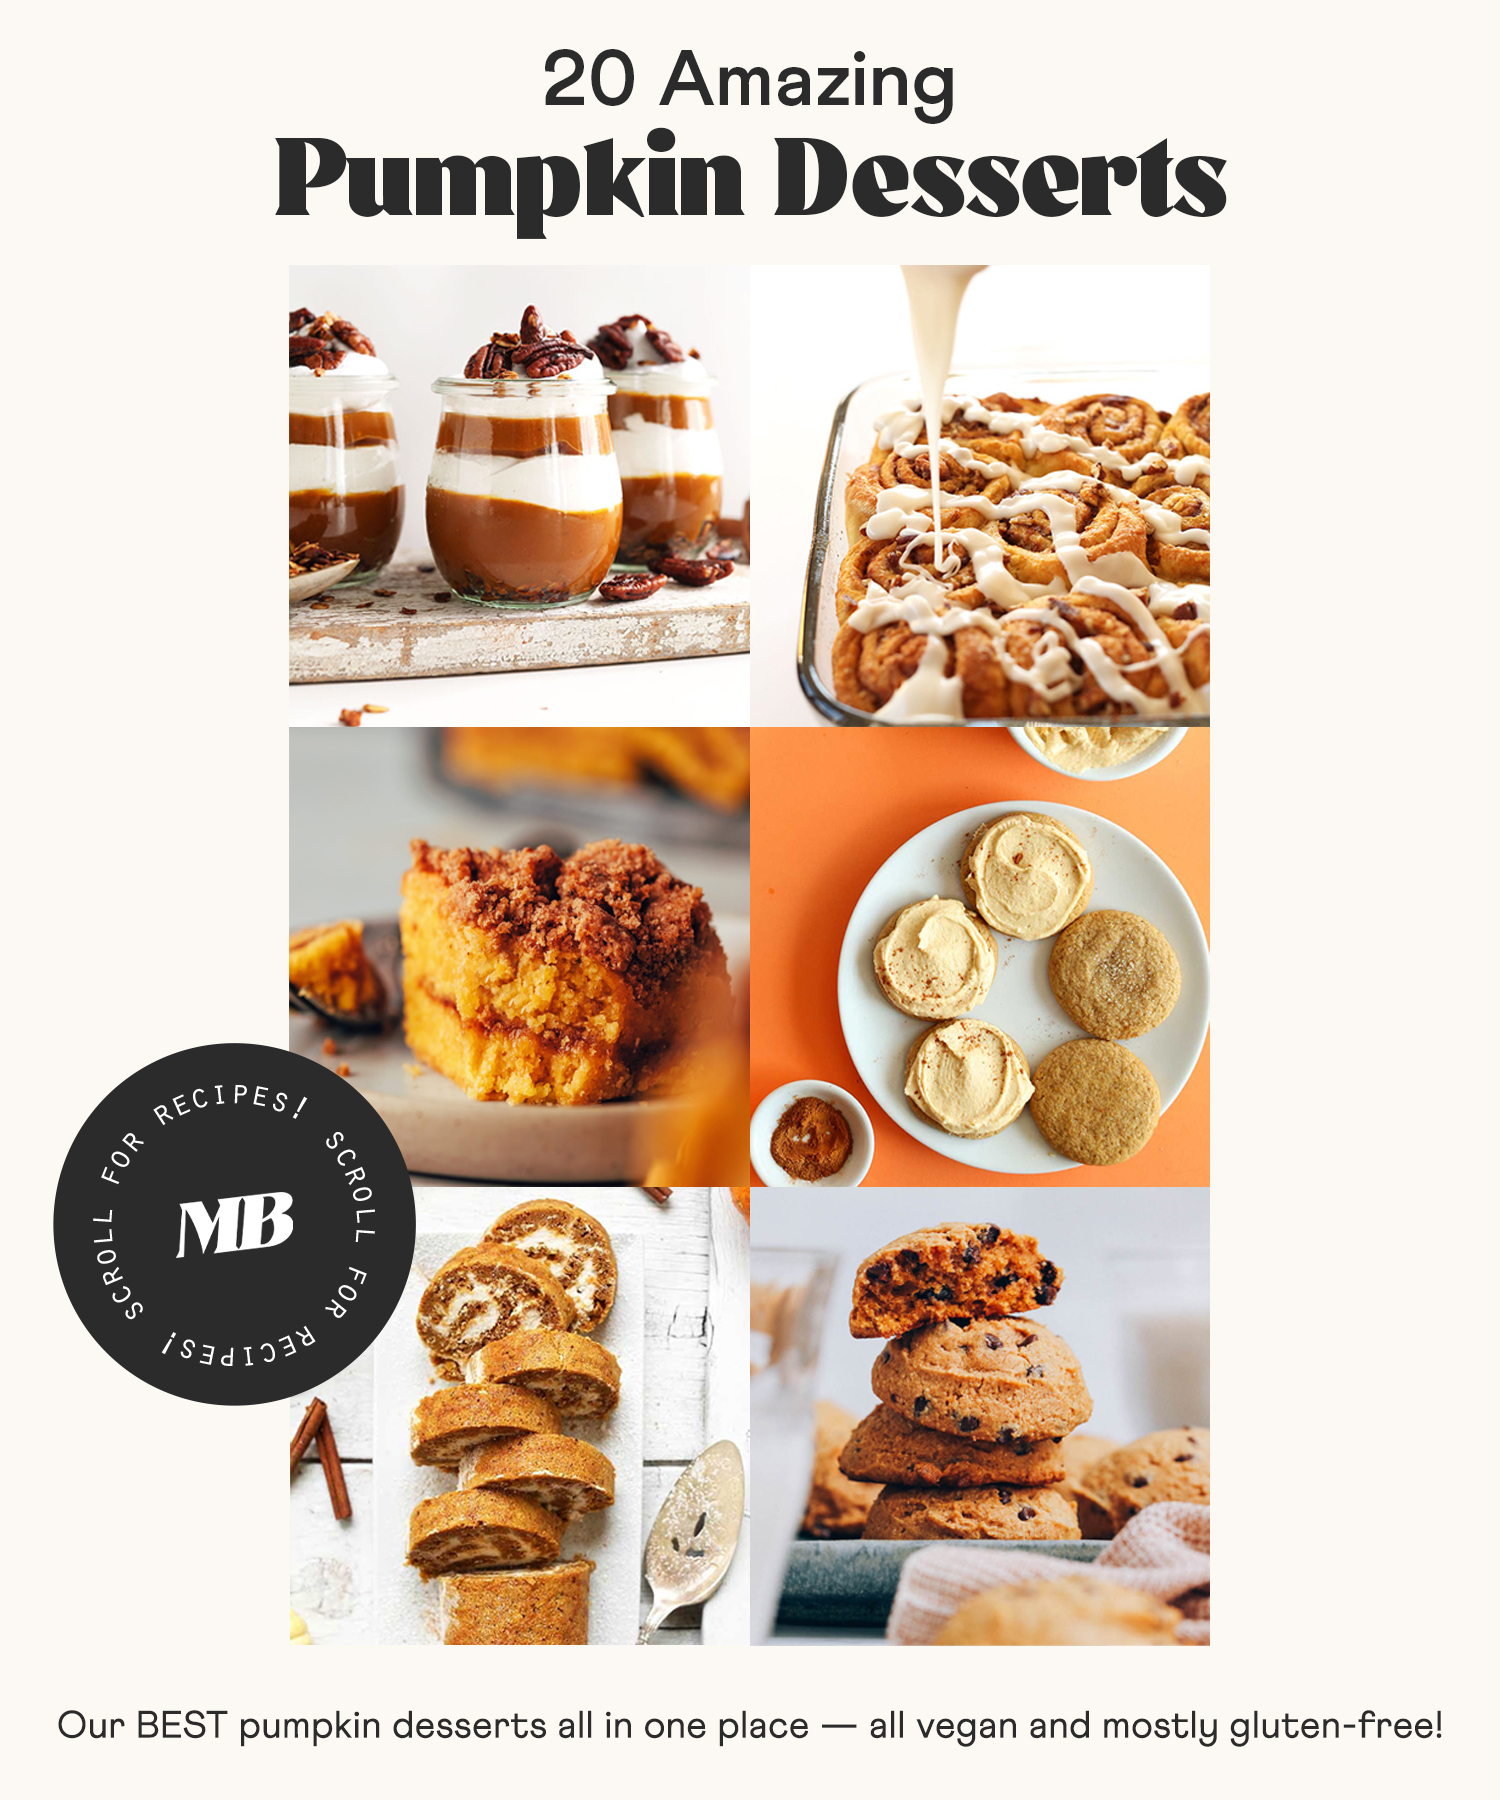 Assortment of vegan and mostly gluten-free pumpkin desserts